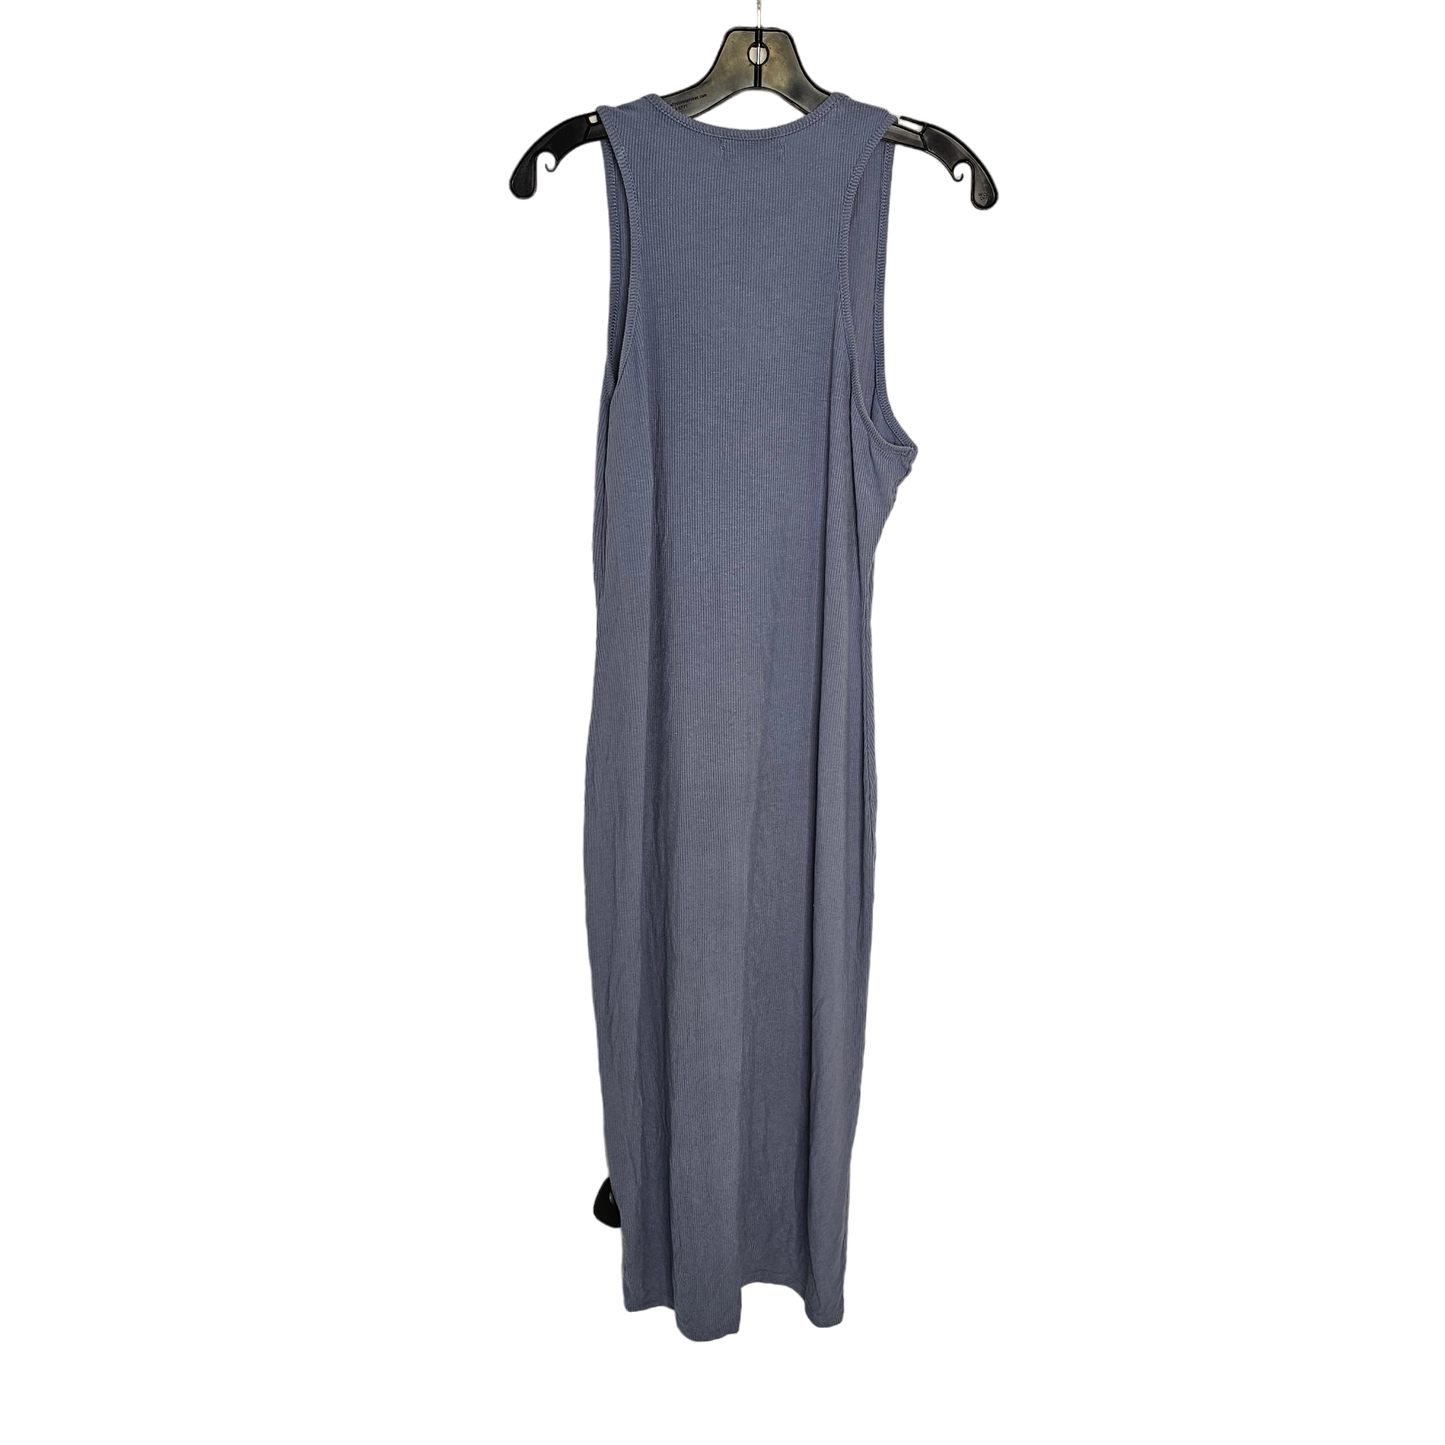 Dress Casual Maxi By tong kiki Size: M